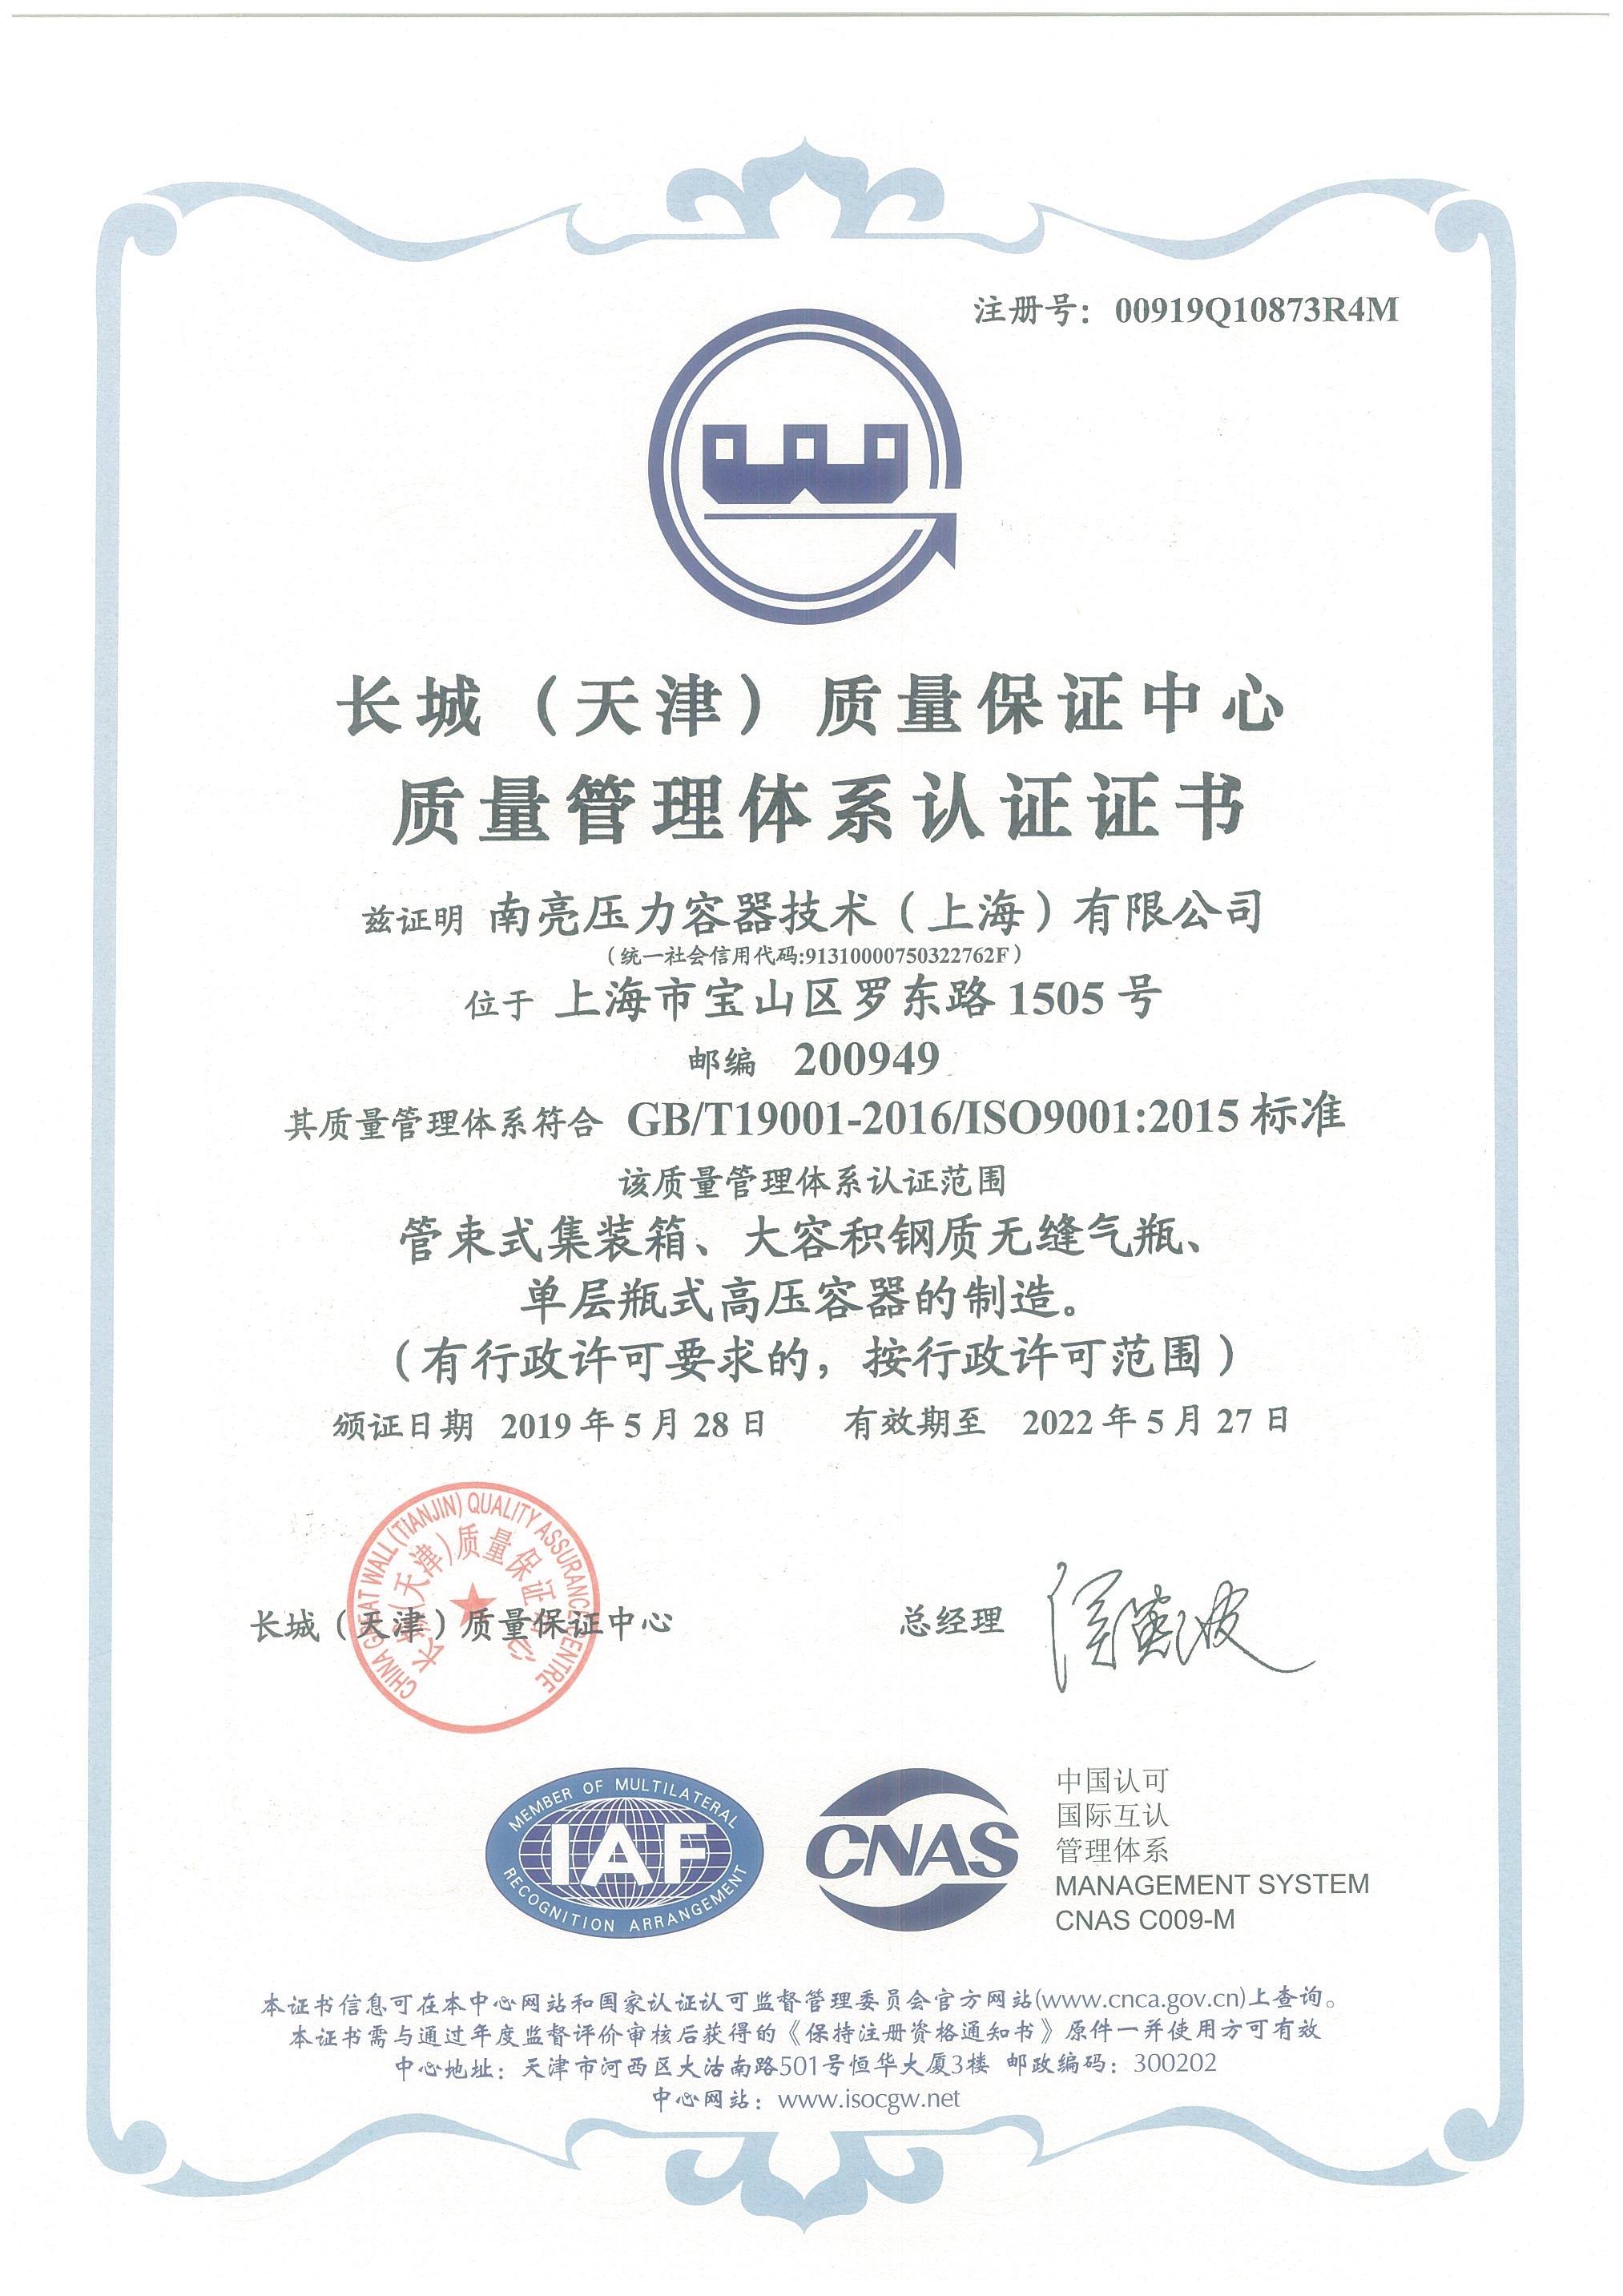 ISO 9001认证